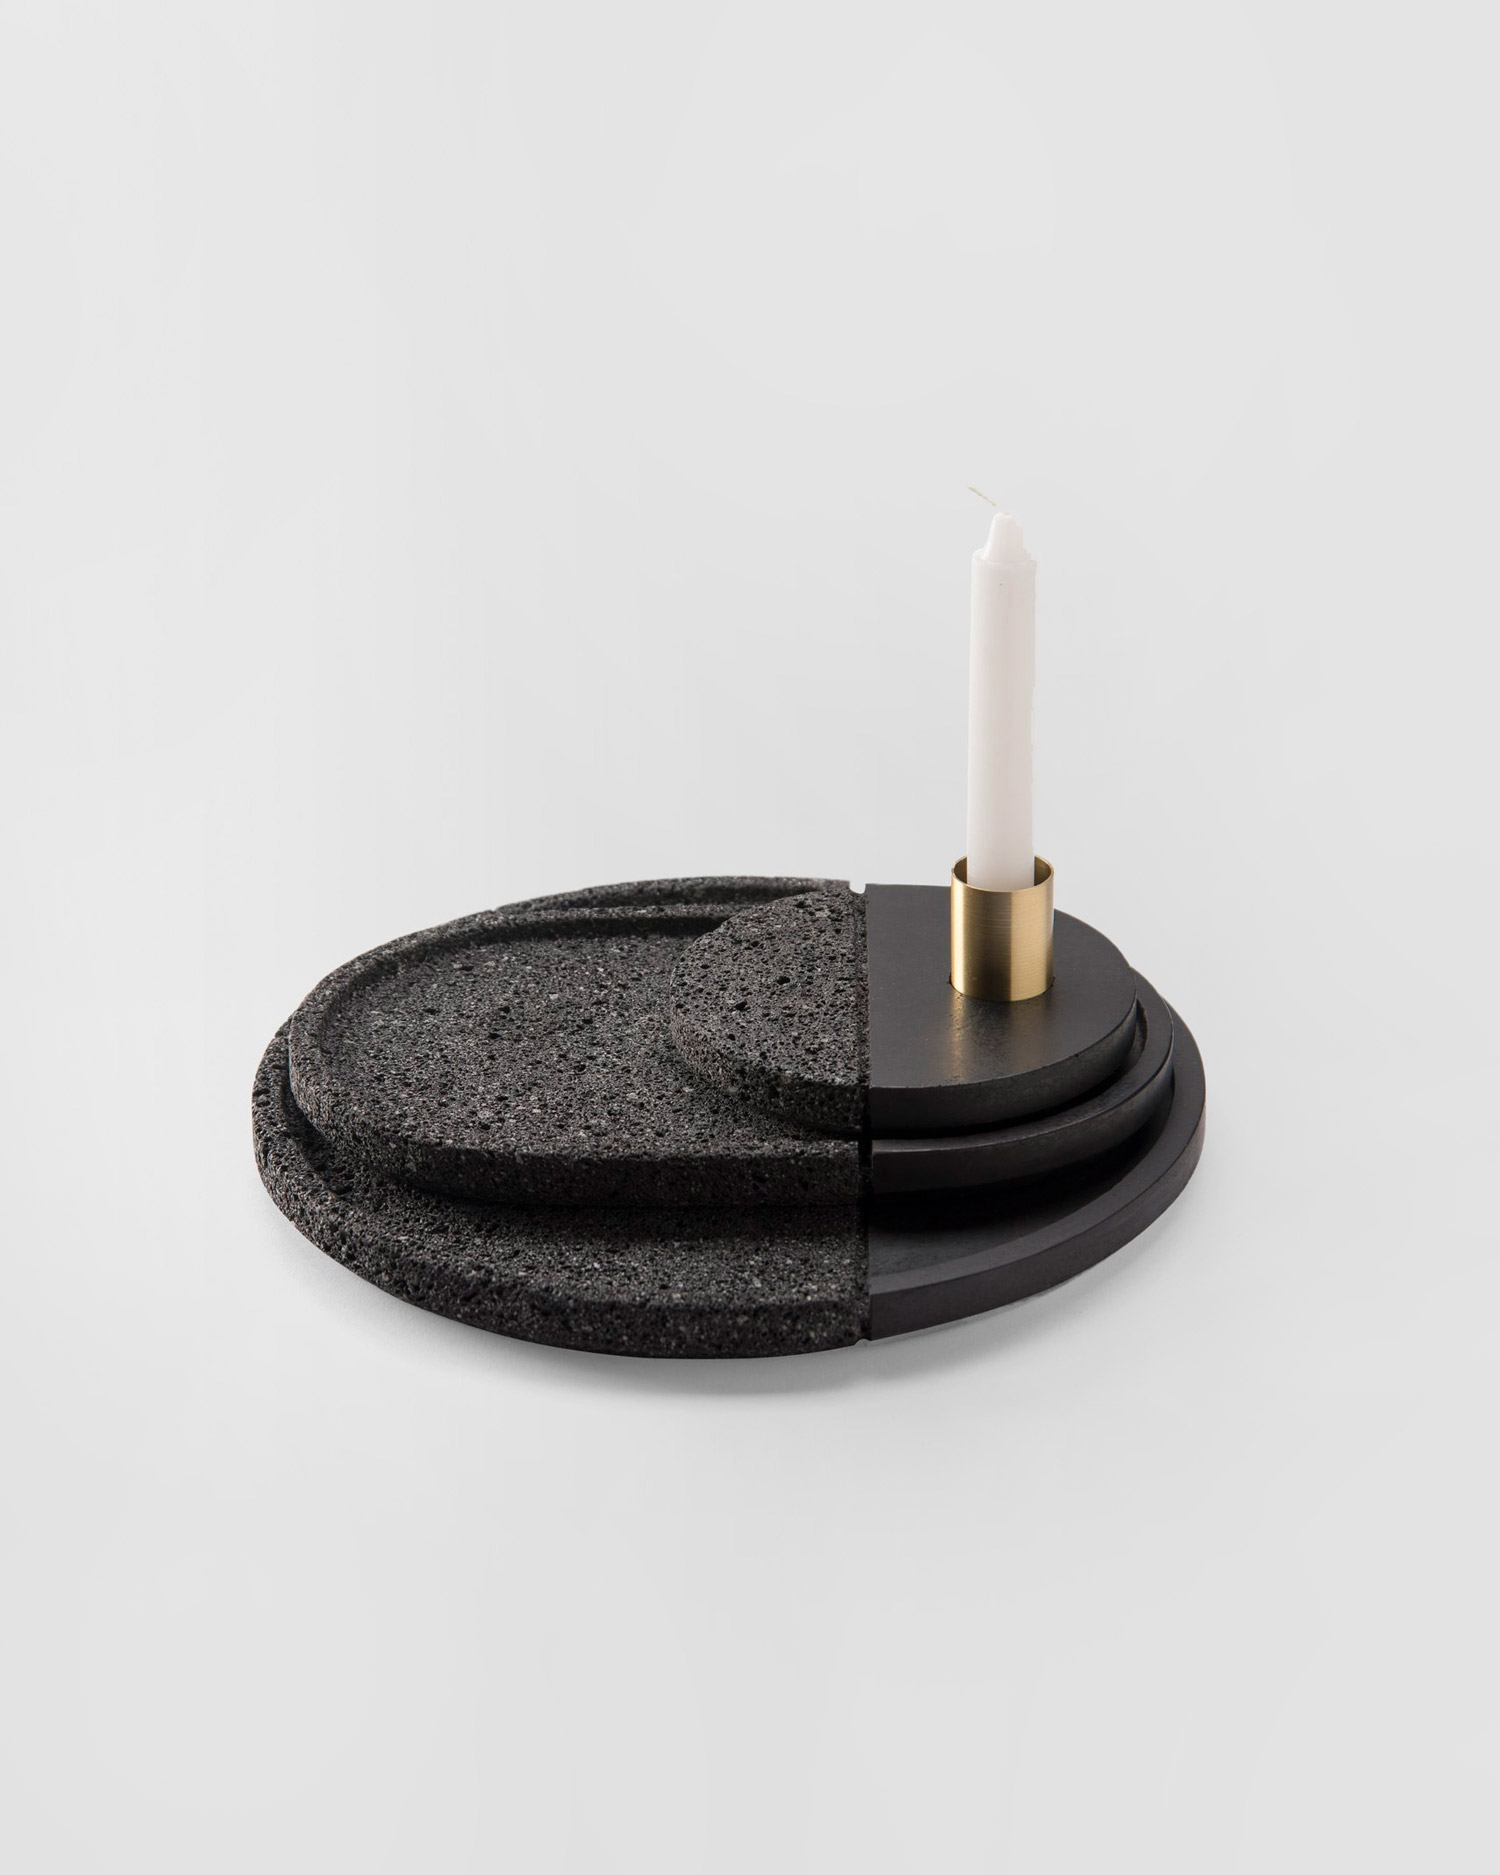 Minimalist Lava Tray by Peca Studio | Aesence